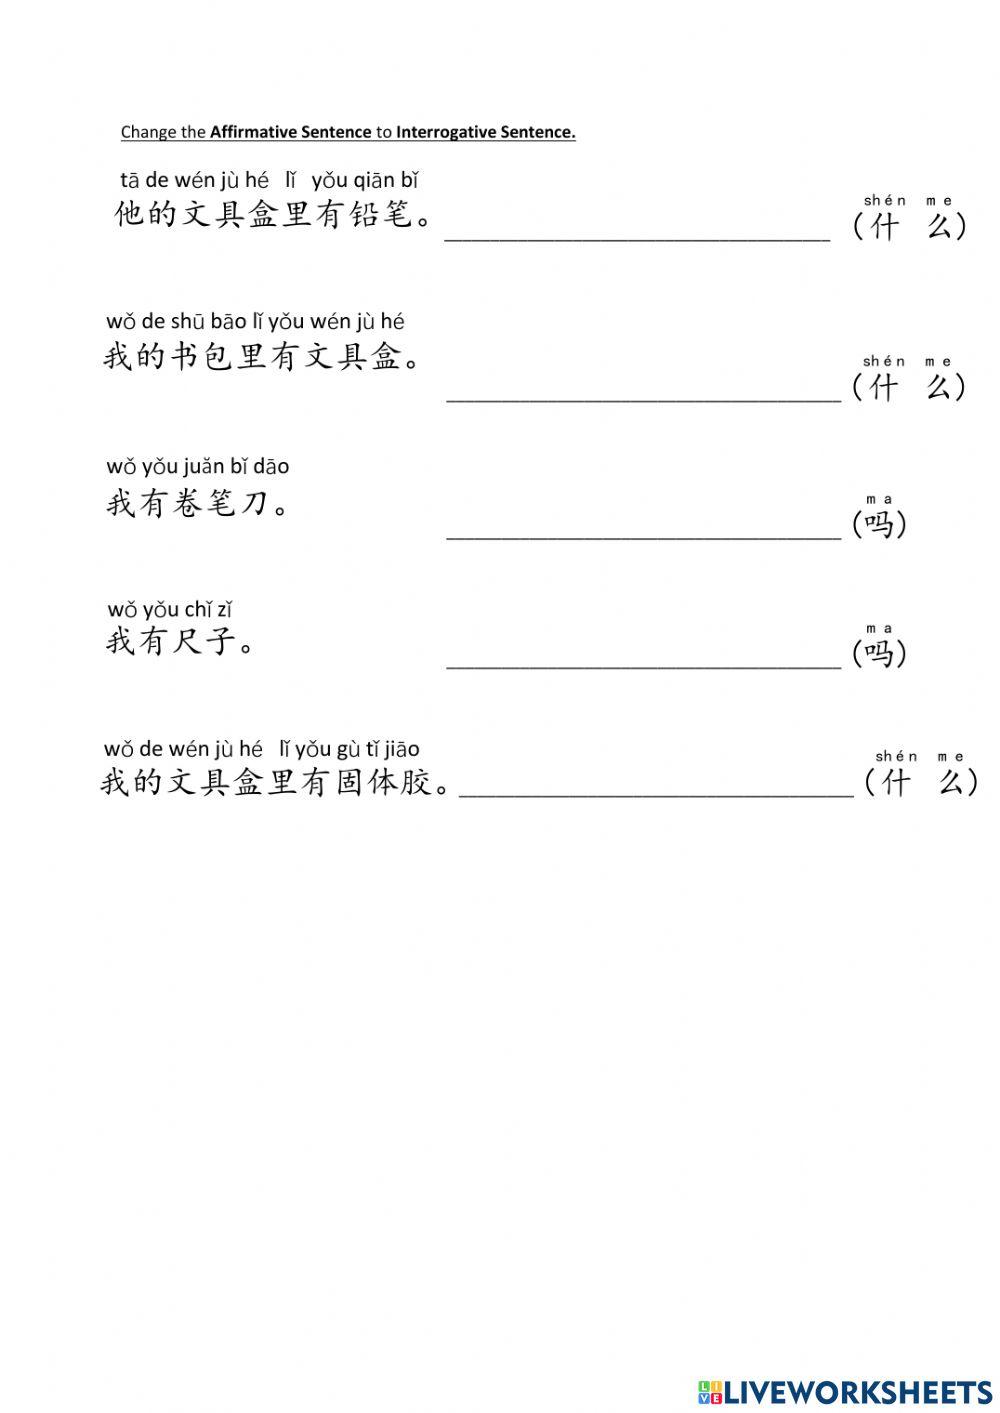 Year 3 Mandarin Worksheet (Affirmative to Interrogative)